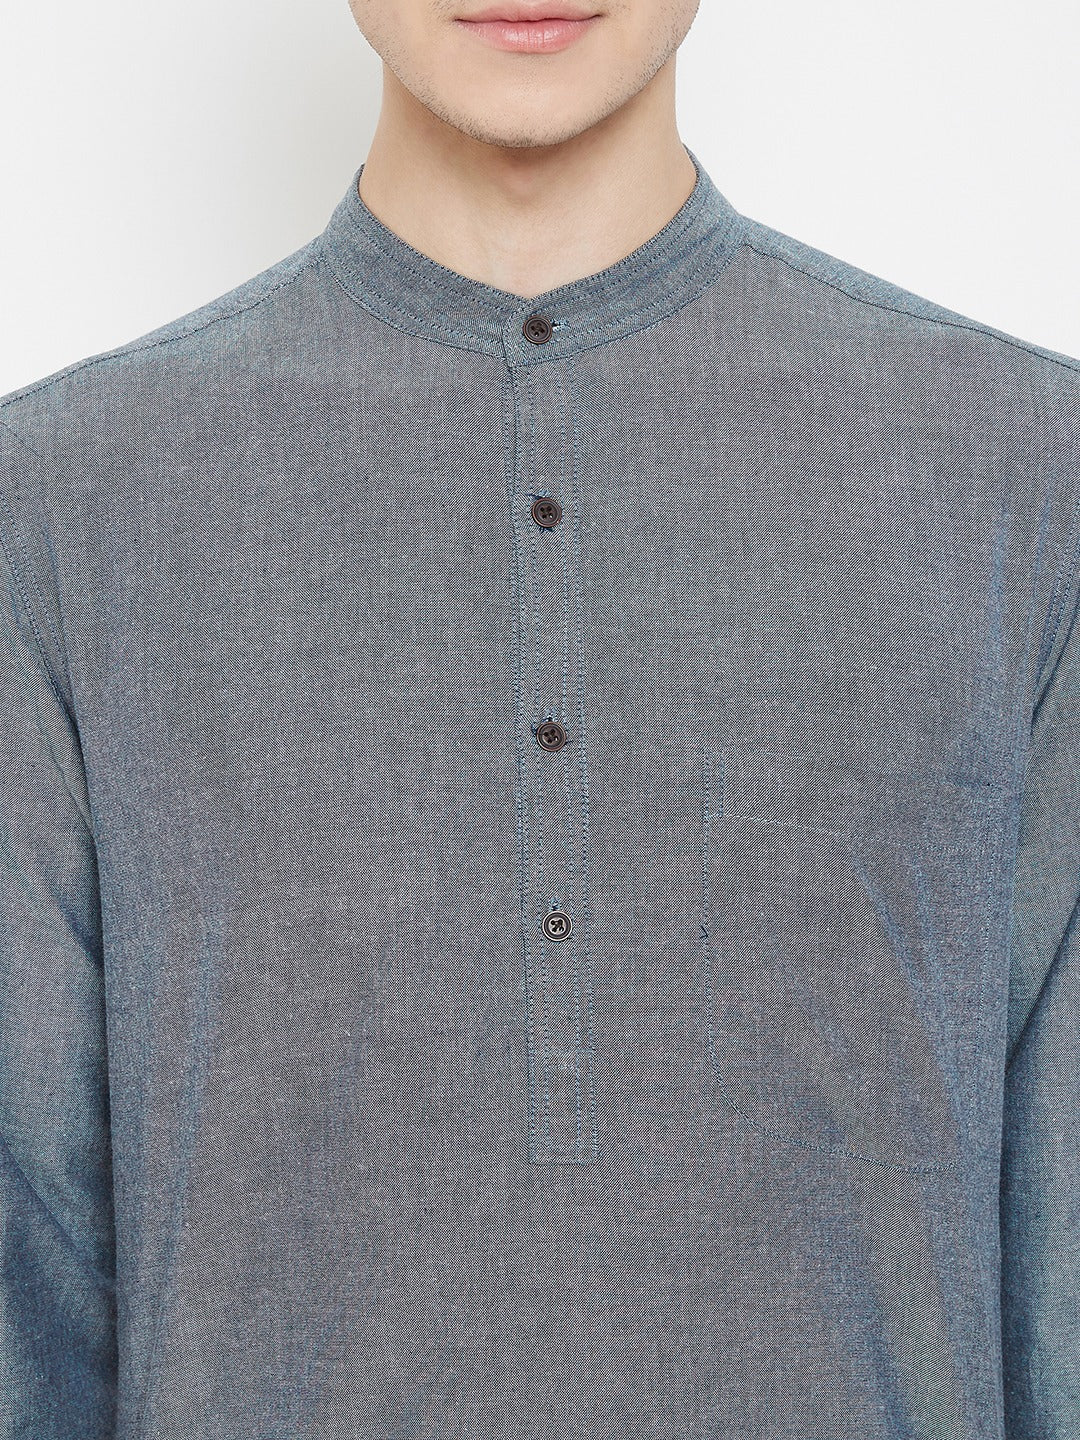 Men's Grey Woven Design Straight  Kurta - Even Apparels